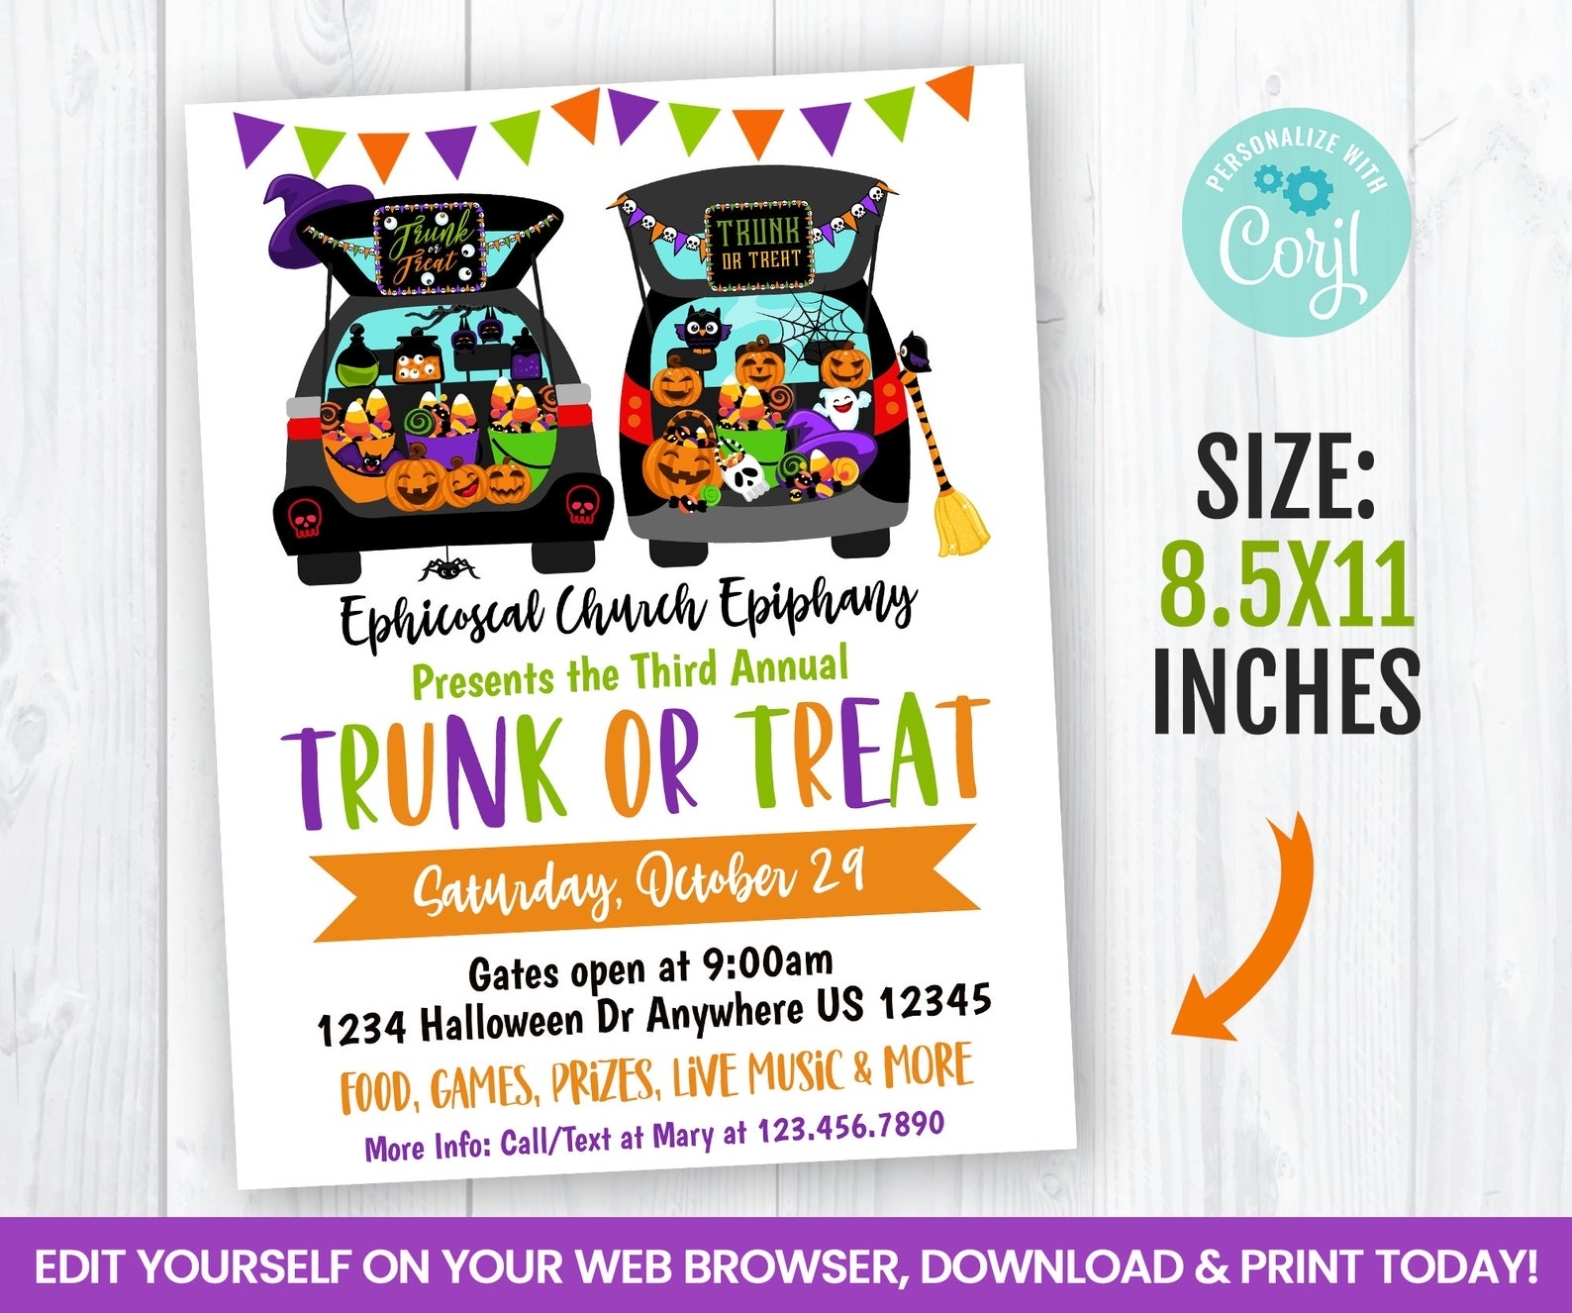 Editable Halloween Trunk Or Treat Flyer Template 8.5X11 | Etsy regarding Trunk Or Treat Flyer Template